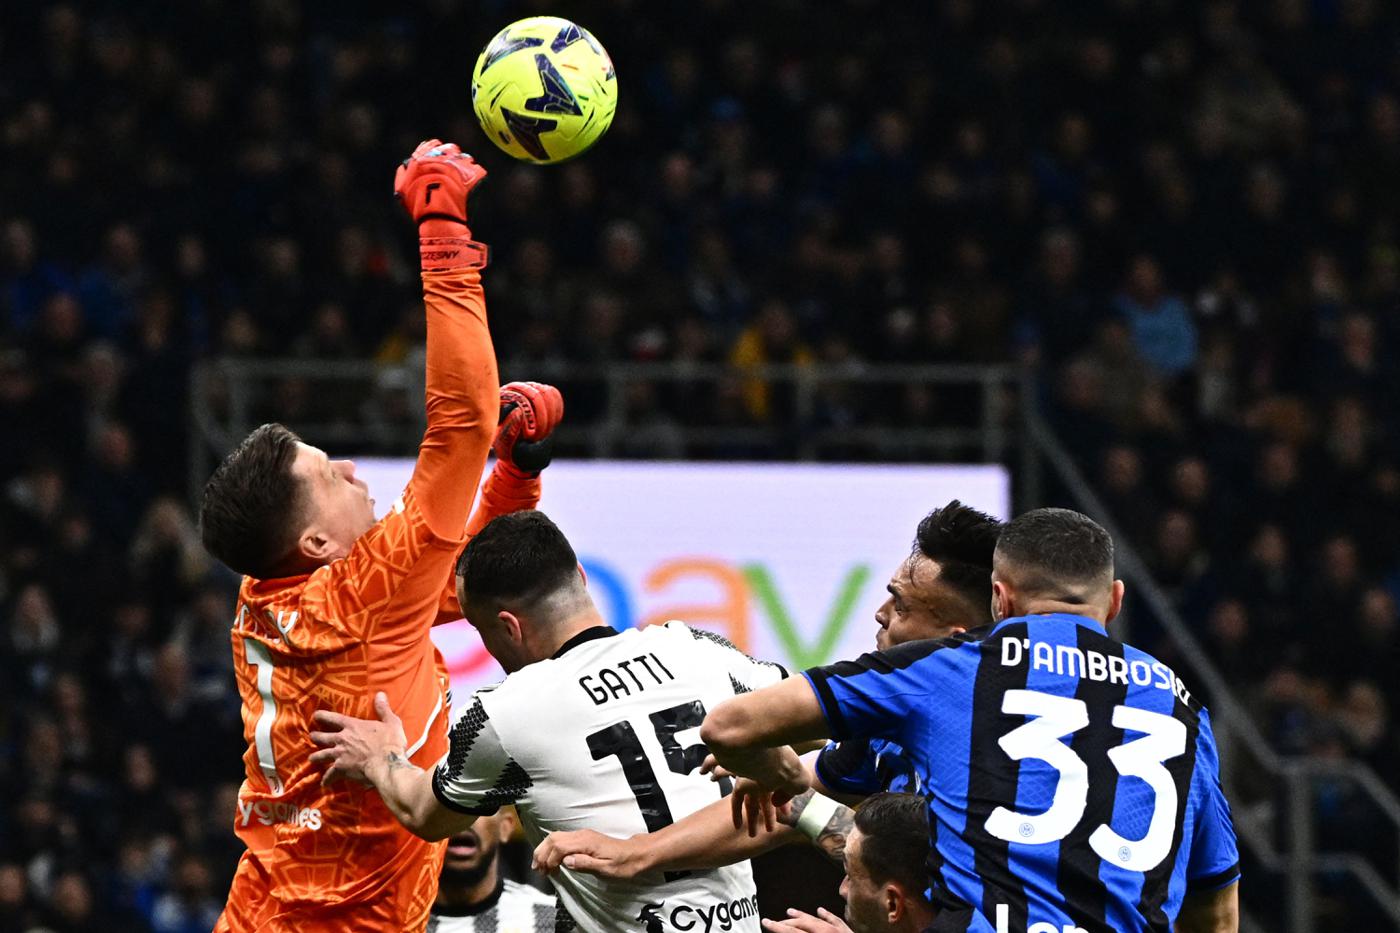 Inter - Juventus - 0-1. Italian Championship, round 27. Match review, statistics.